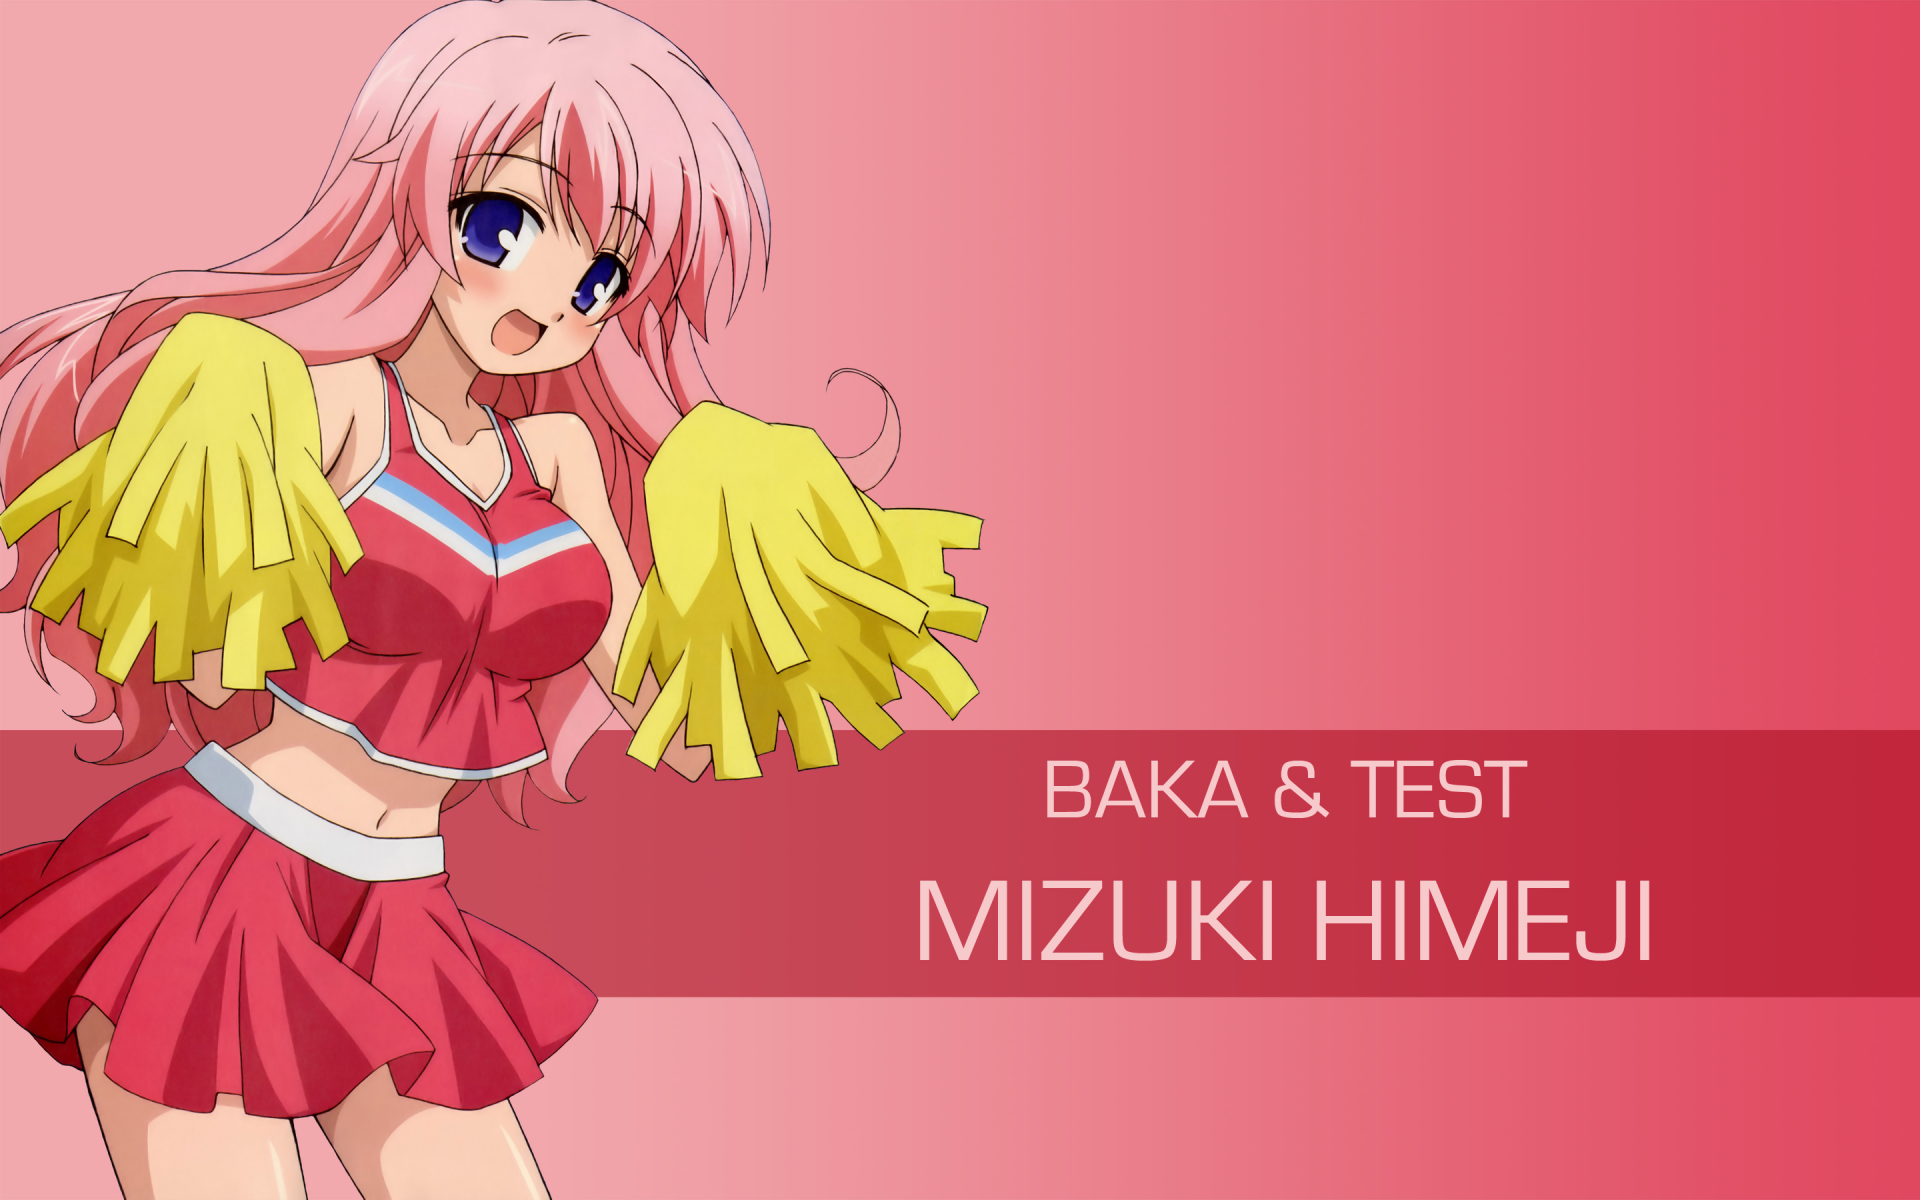 Quality test #baki#edit#fyp#fypシ#404🦾💯⚠️#anime#blowthisup